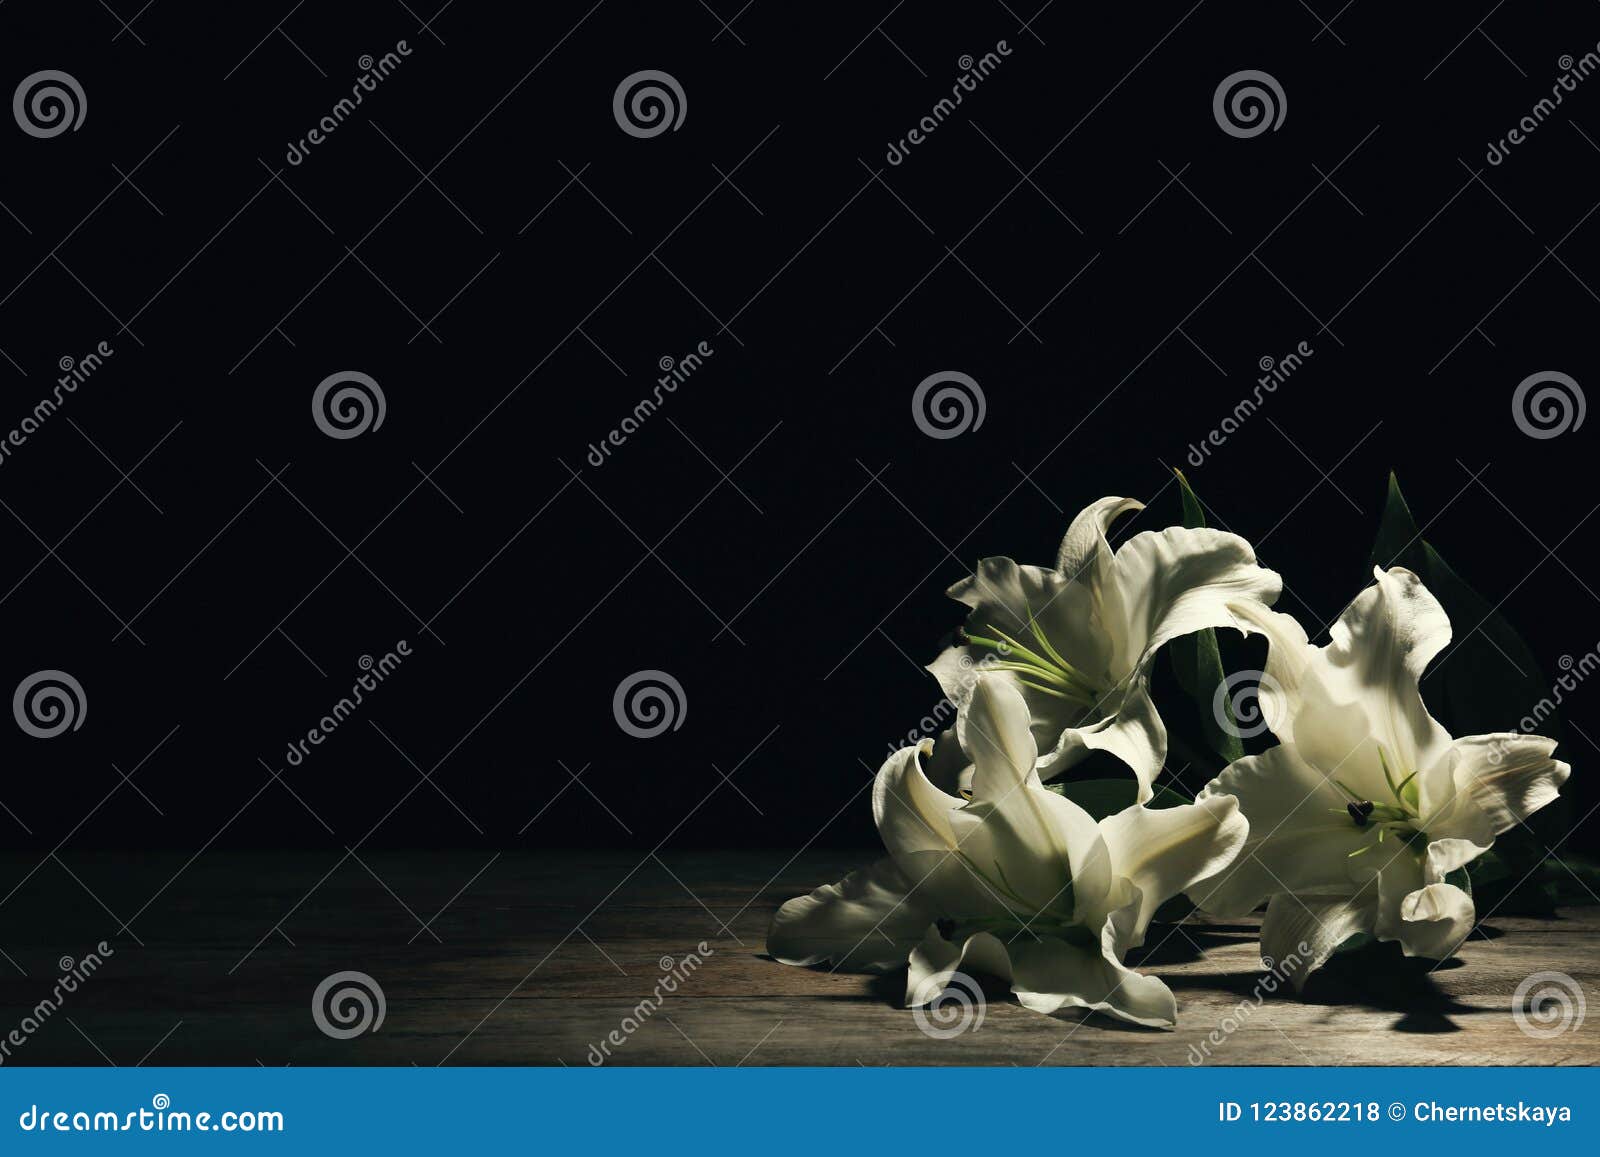 beautiful lilies on dark background wit